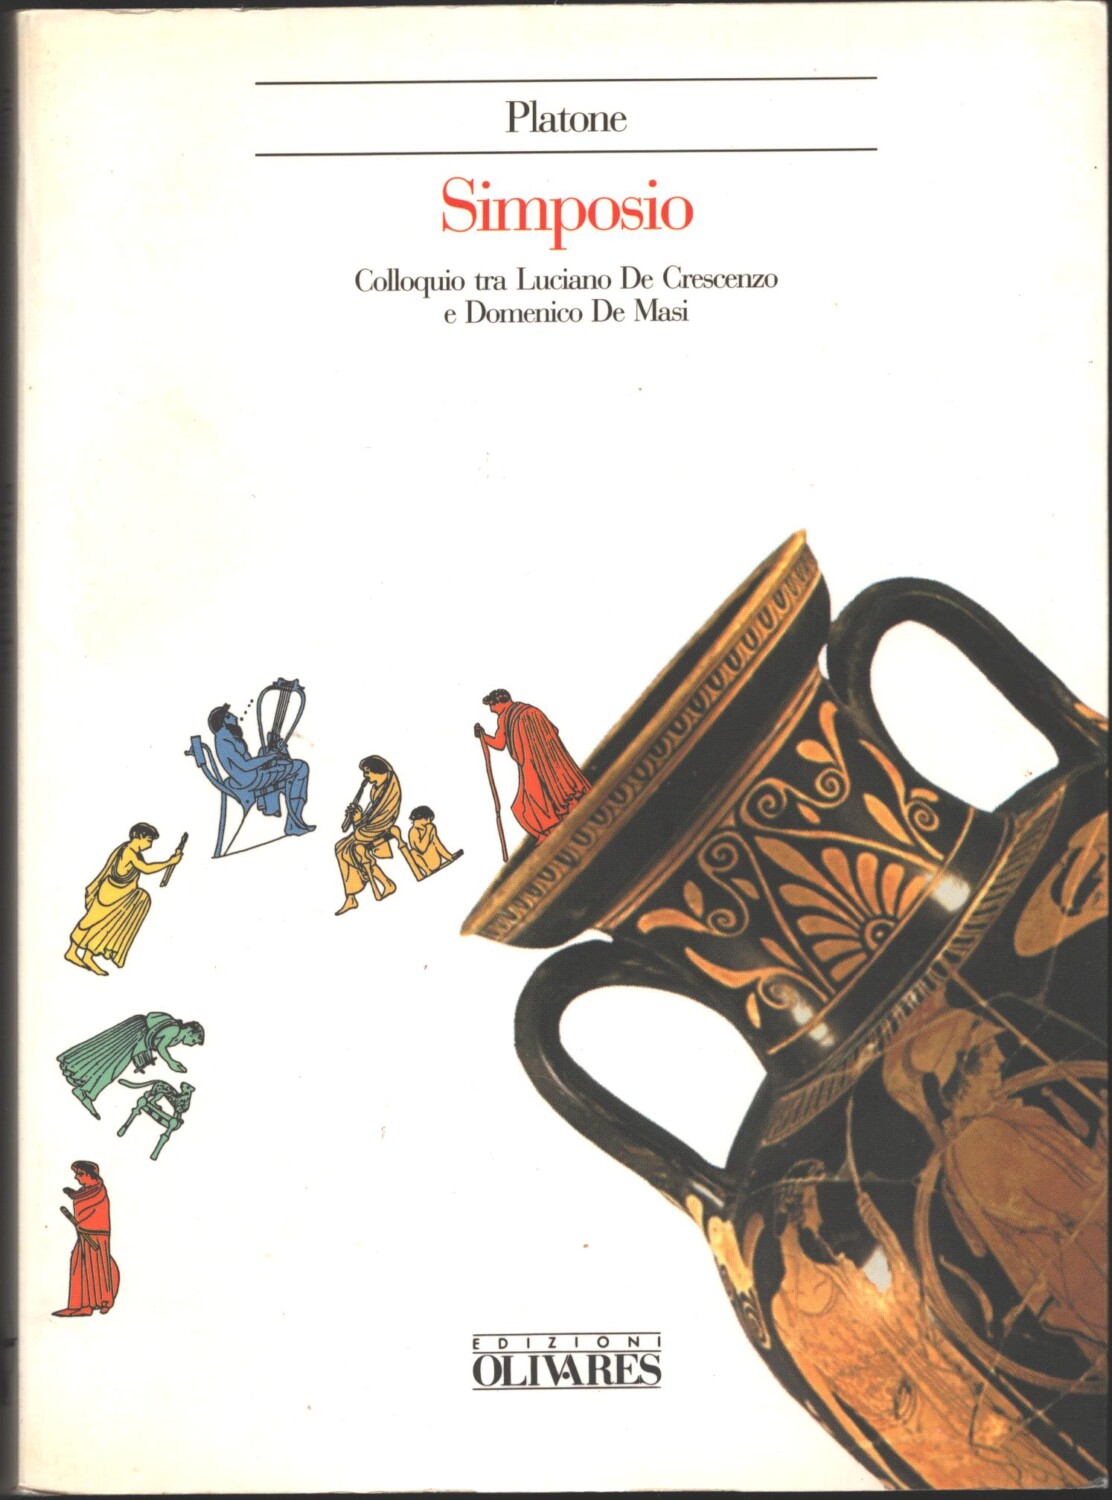 Platone-simposio adelphi 1984